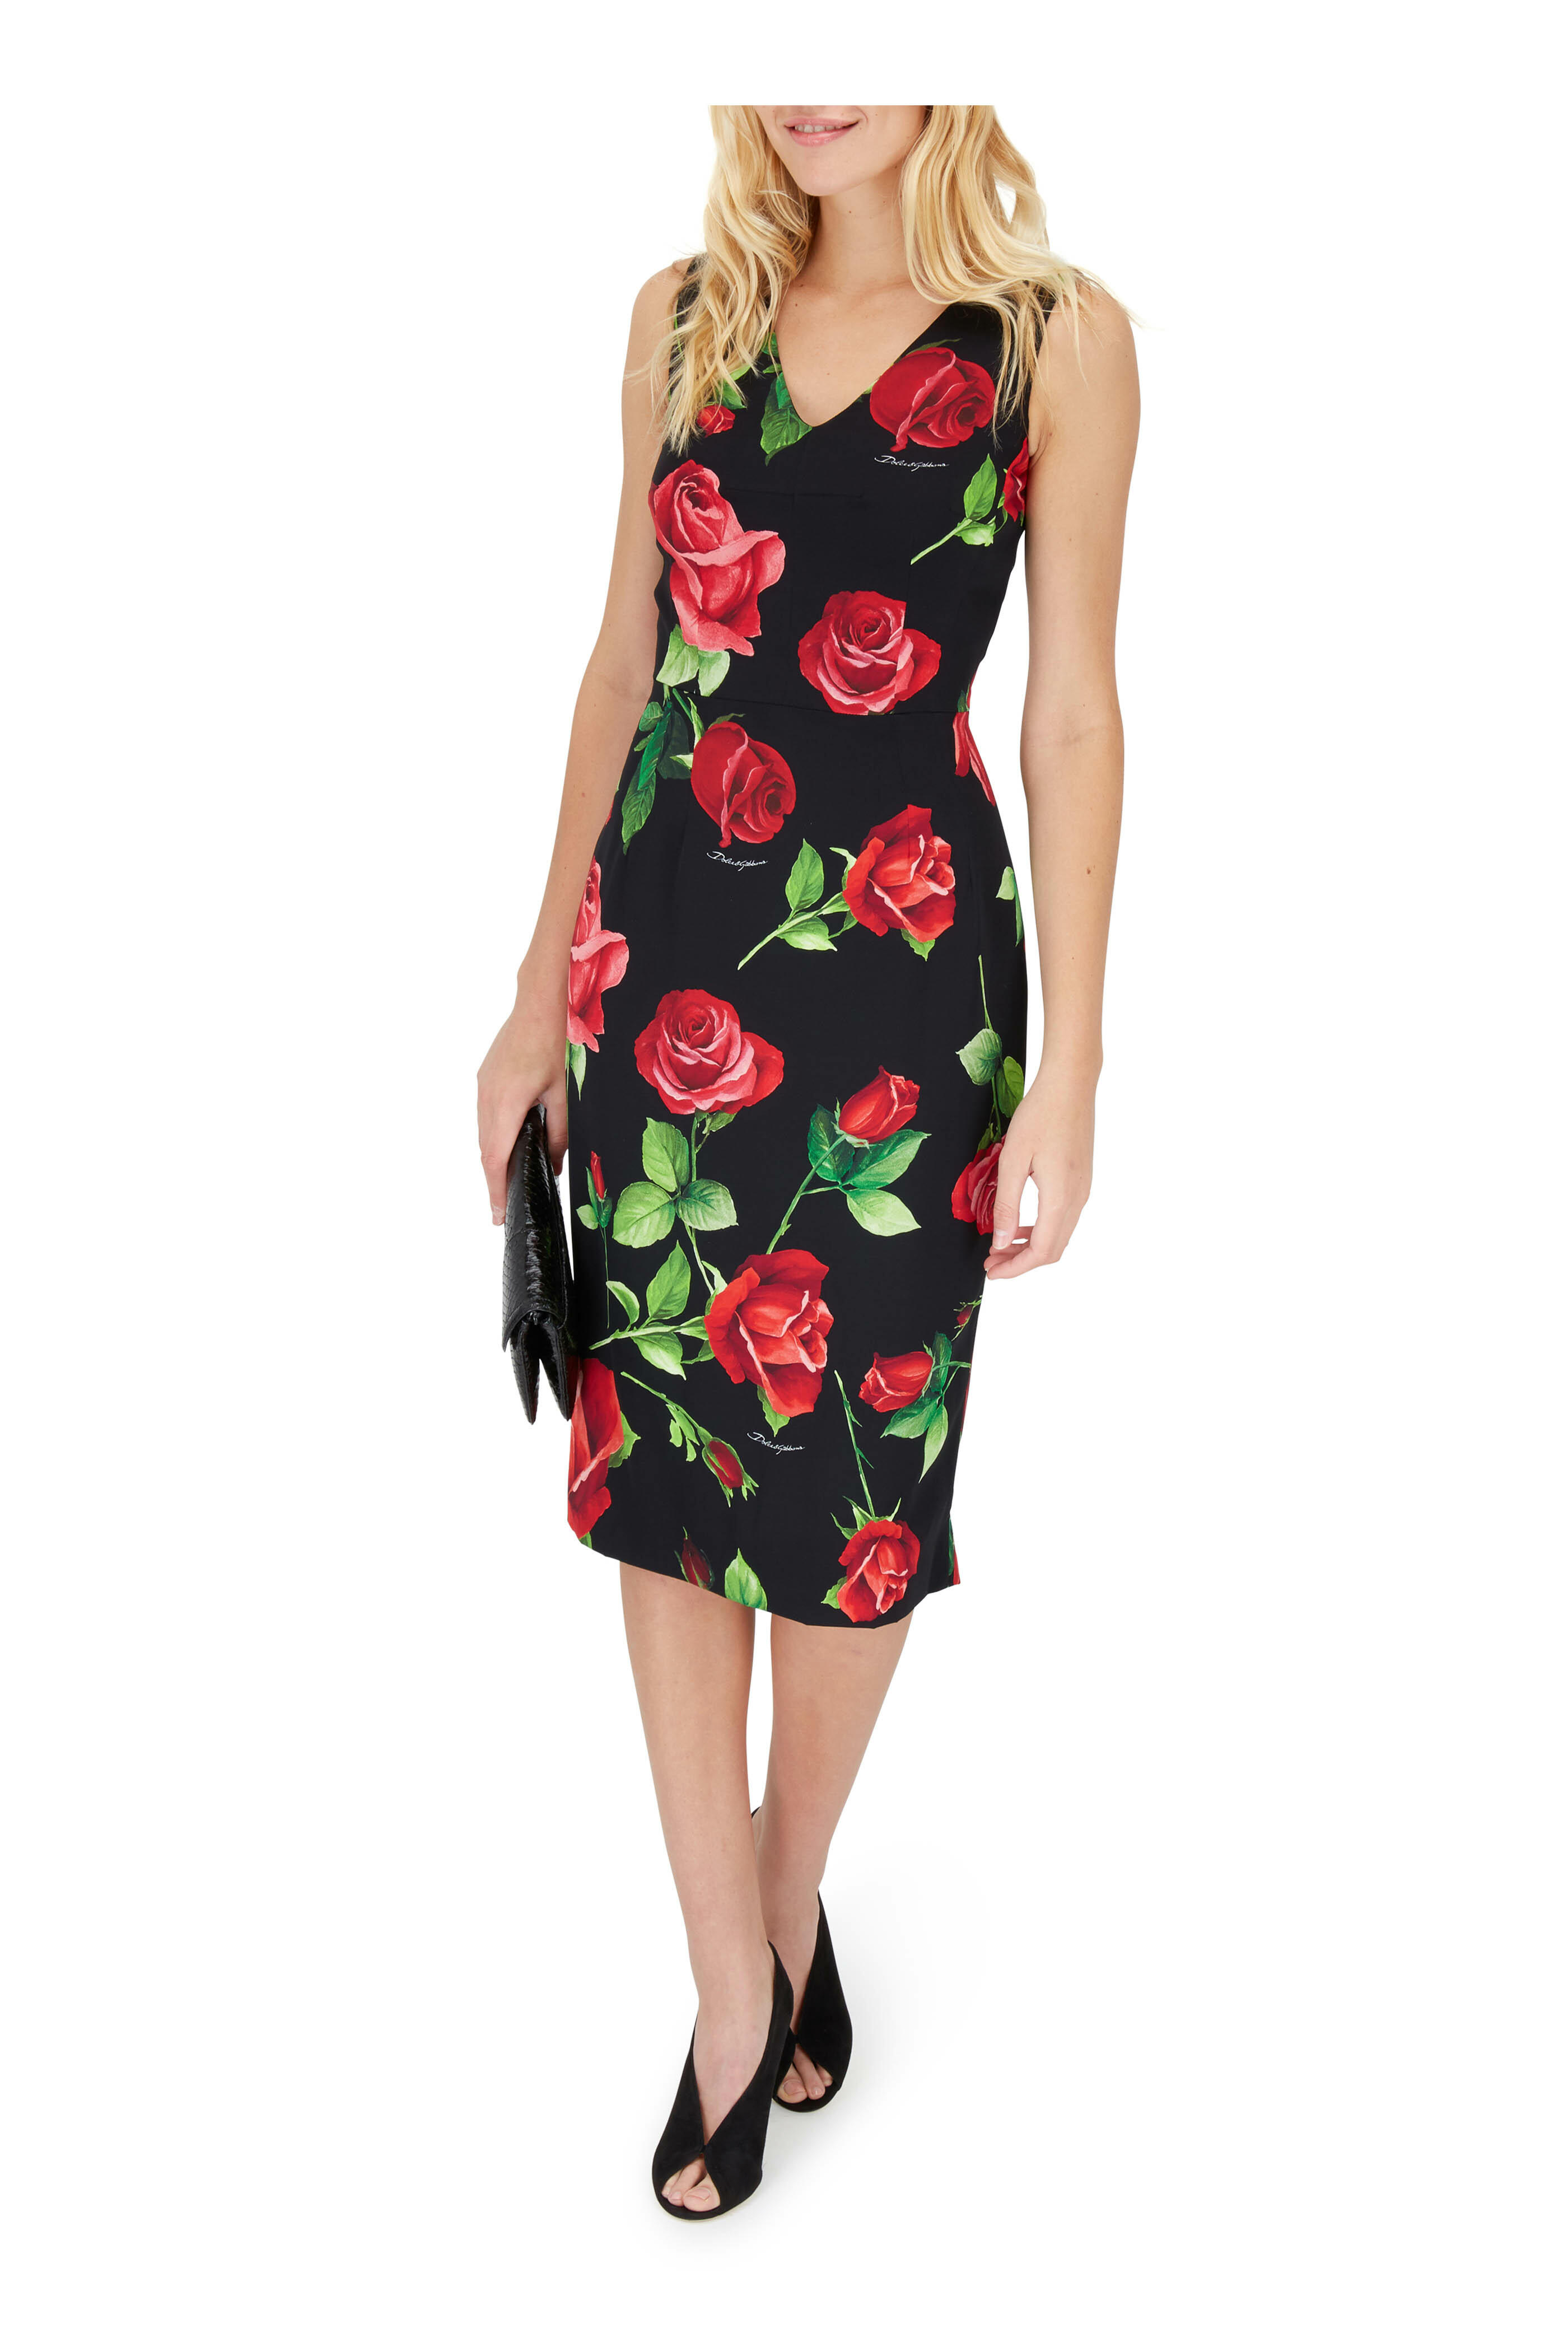 Dolce & Gabbana - Black & Red Rose Sleeveless Sheath Dress